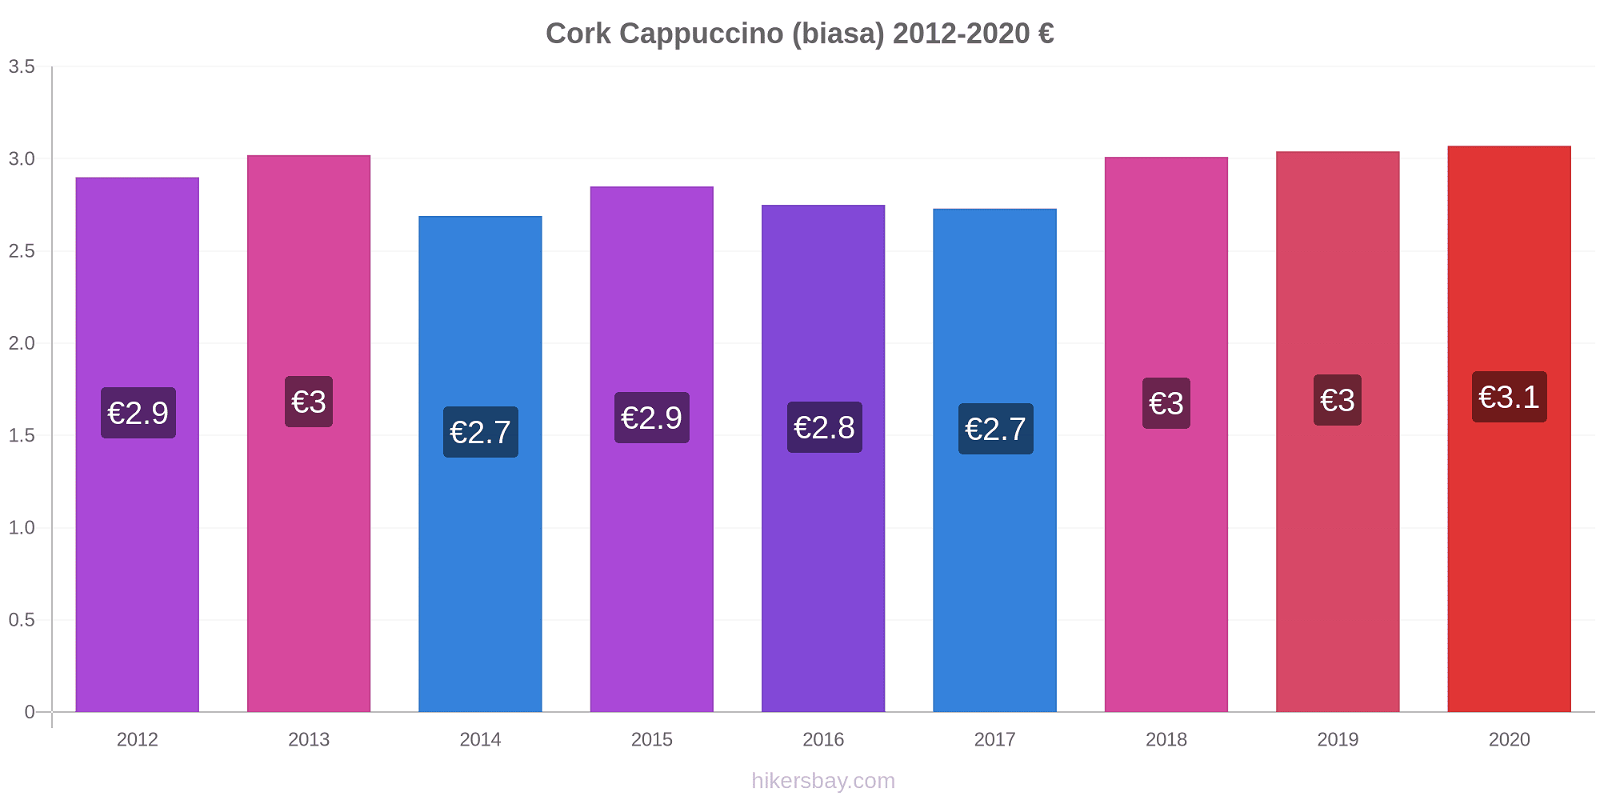 Cork perubahan harga Cappuccino (biasa) hikersbay.com